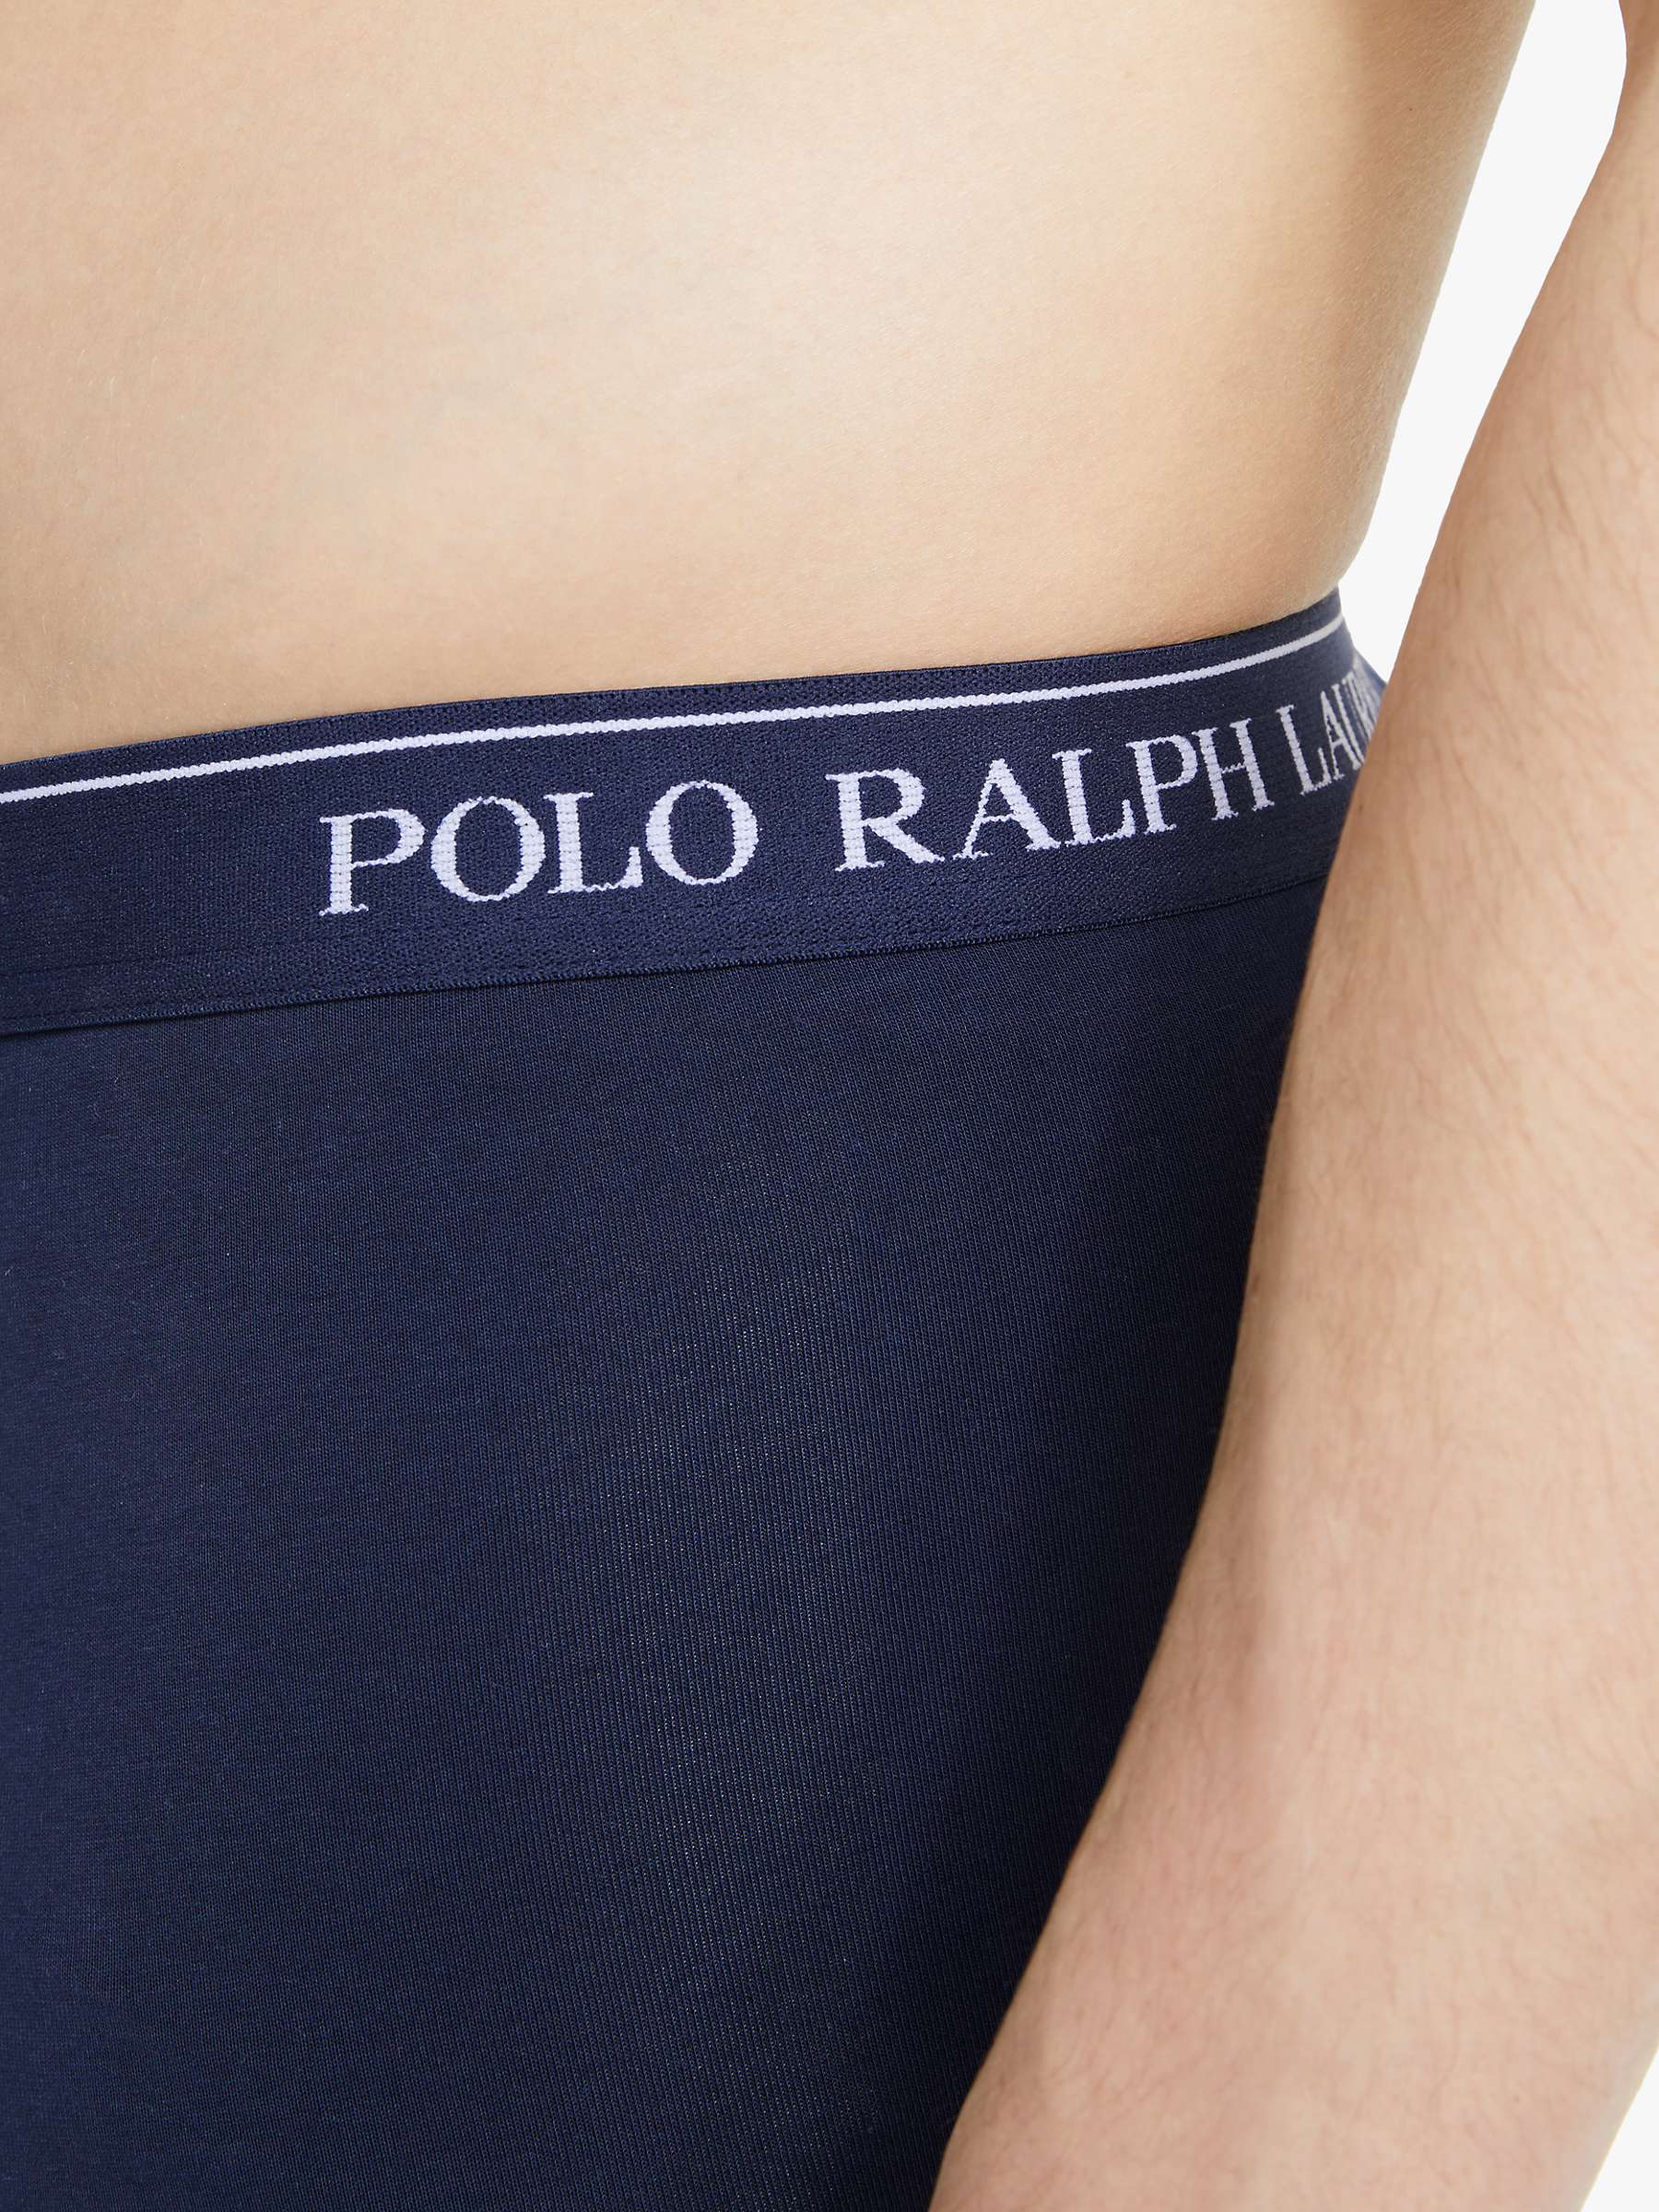 Buy Polo Ralph Lauren Contrast Waistband Trunks, Pack of 3, Blue Online at johnlewis.com